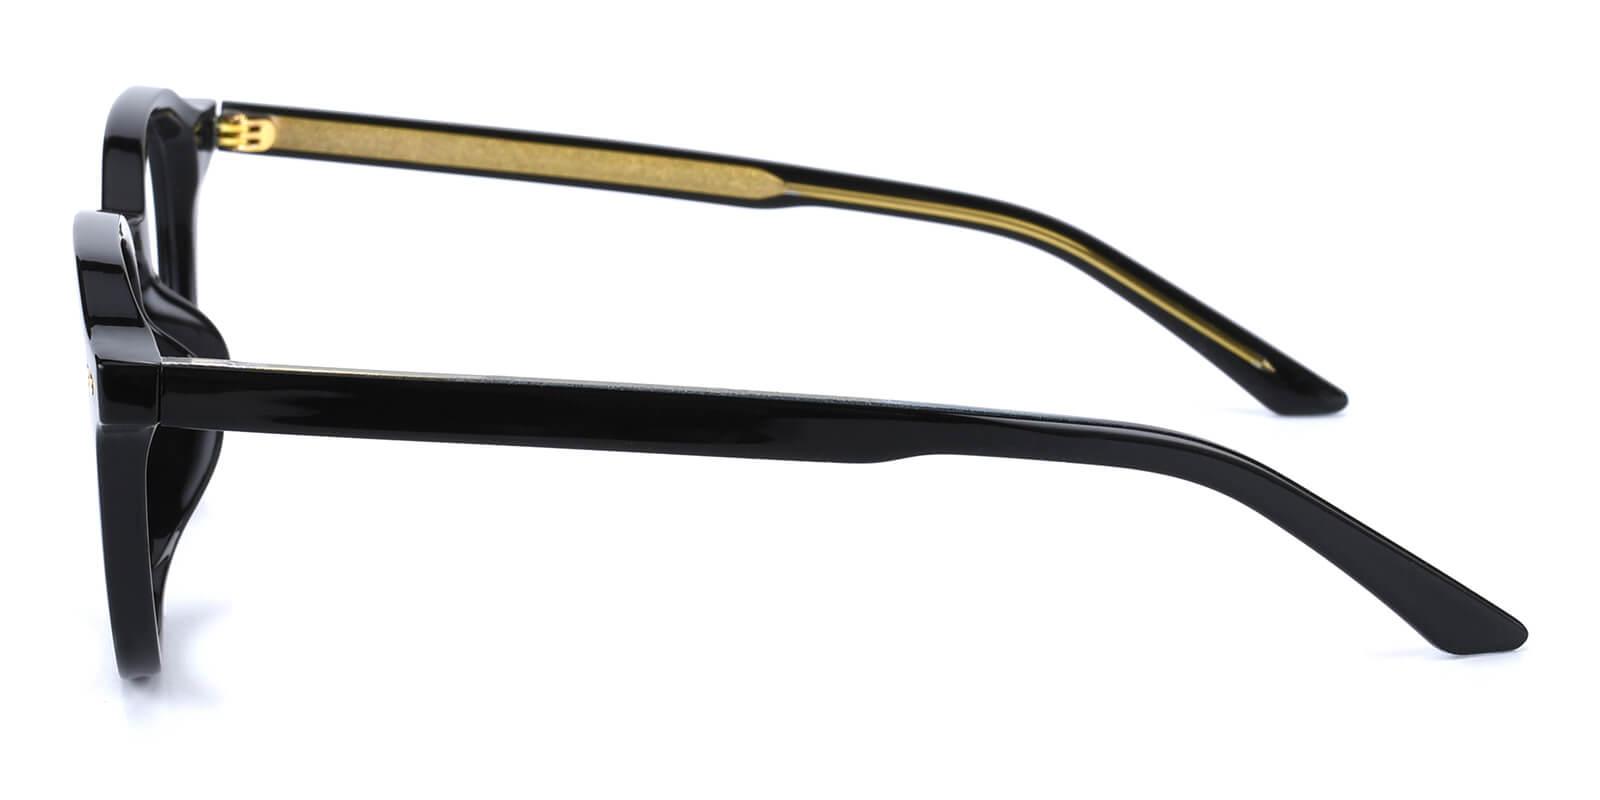 Dapper-Black-Geometric / Square-Acetate-Eyeglasses-detail